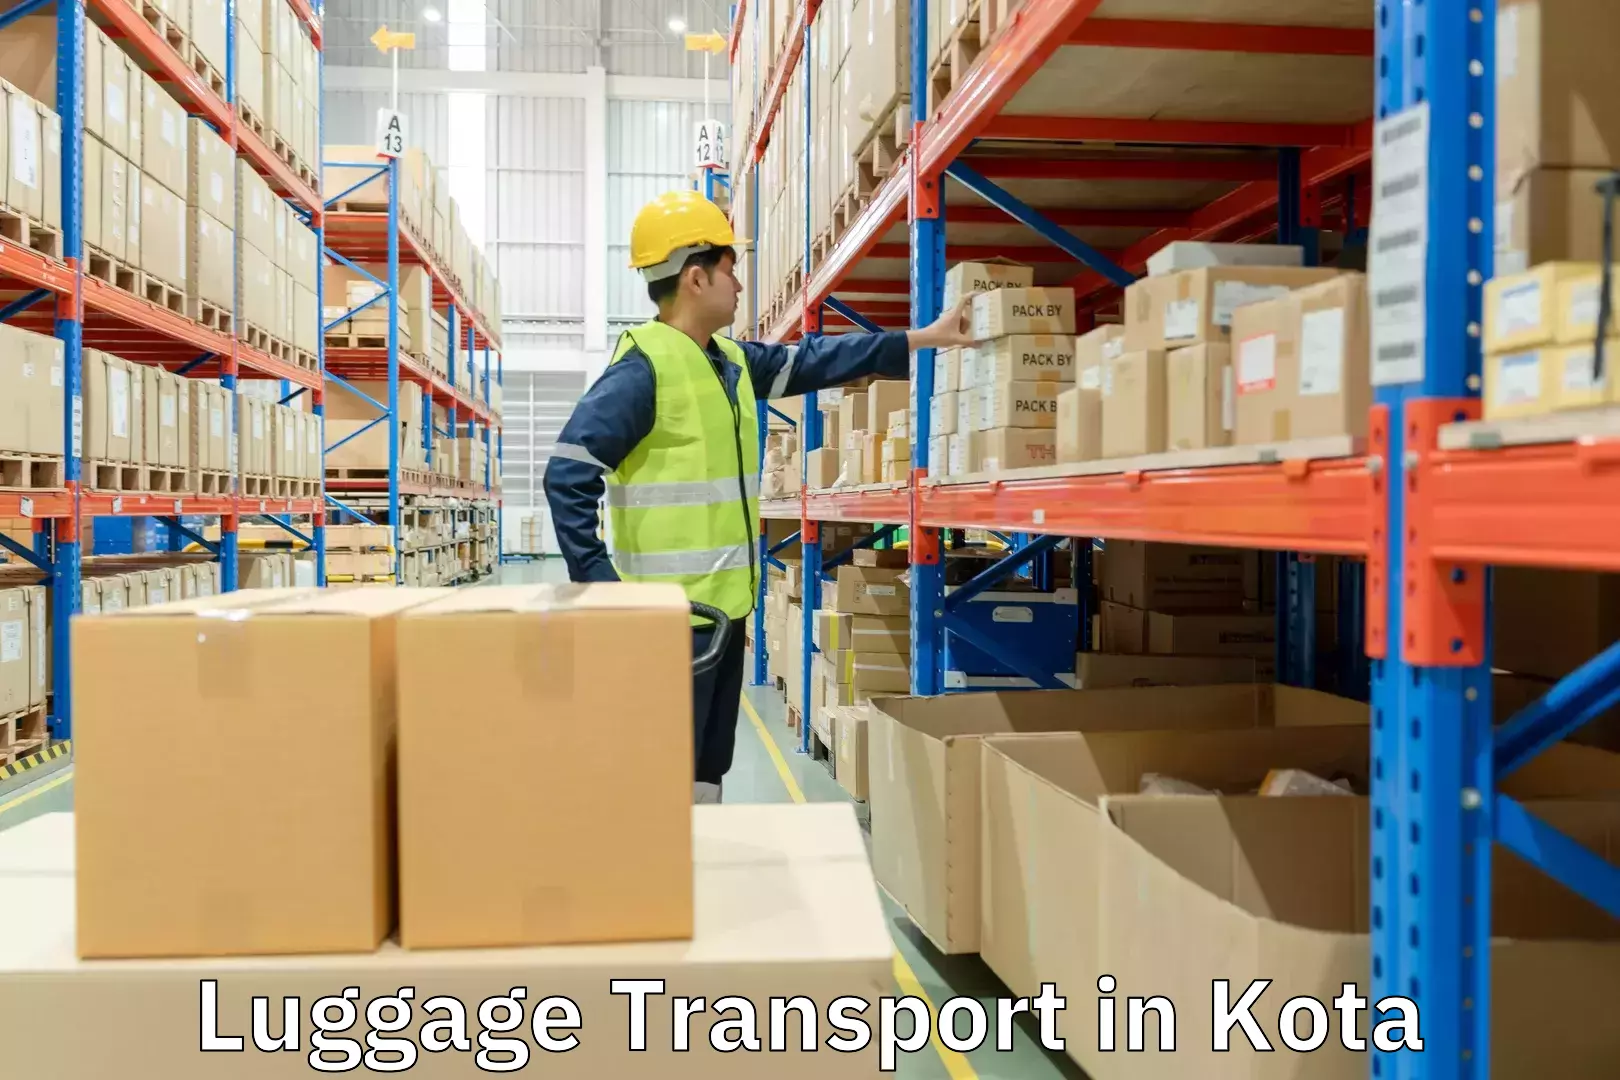 Luggage shipment processing in Kota